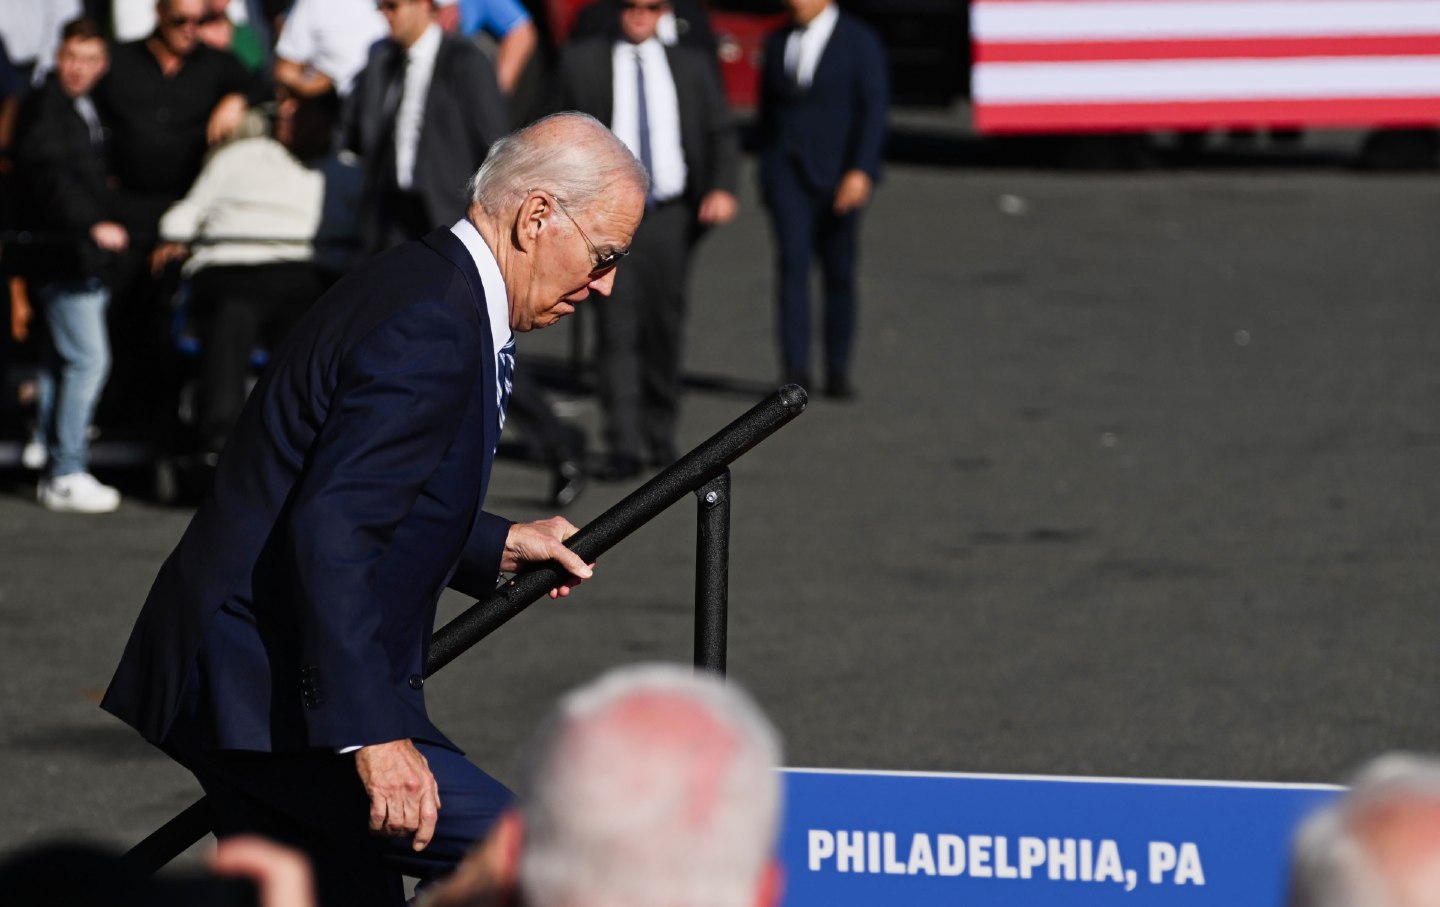 President Joe Biden stumbles while walking on stage